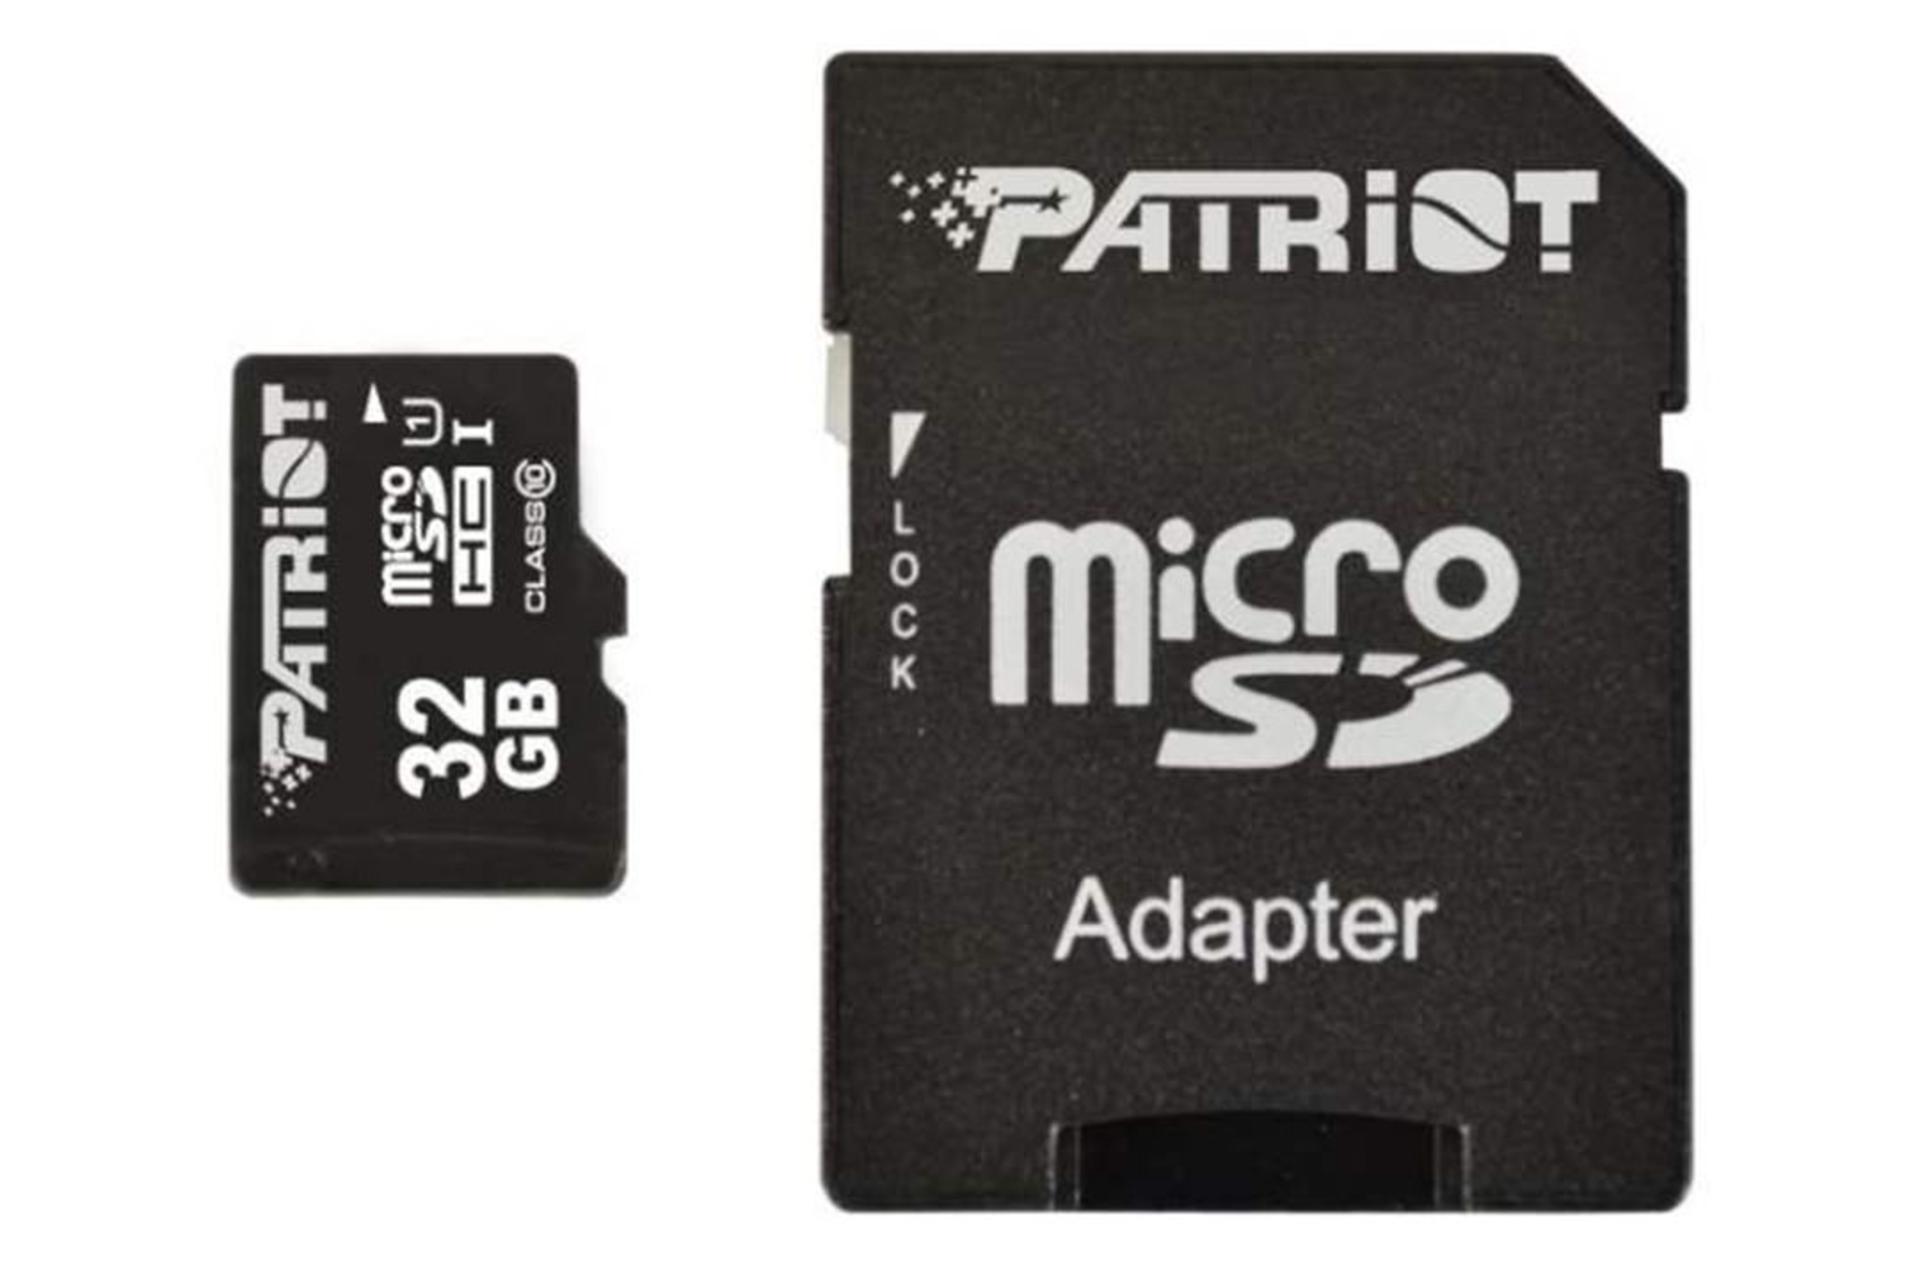 Patriot LX microSDHC Class 10 UHS-I U1 32GB